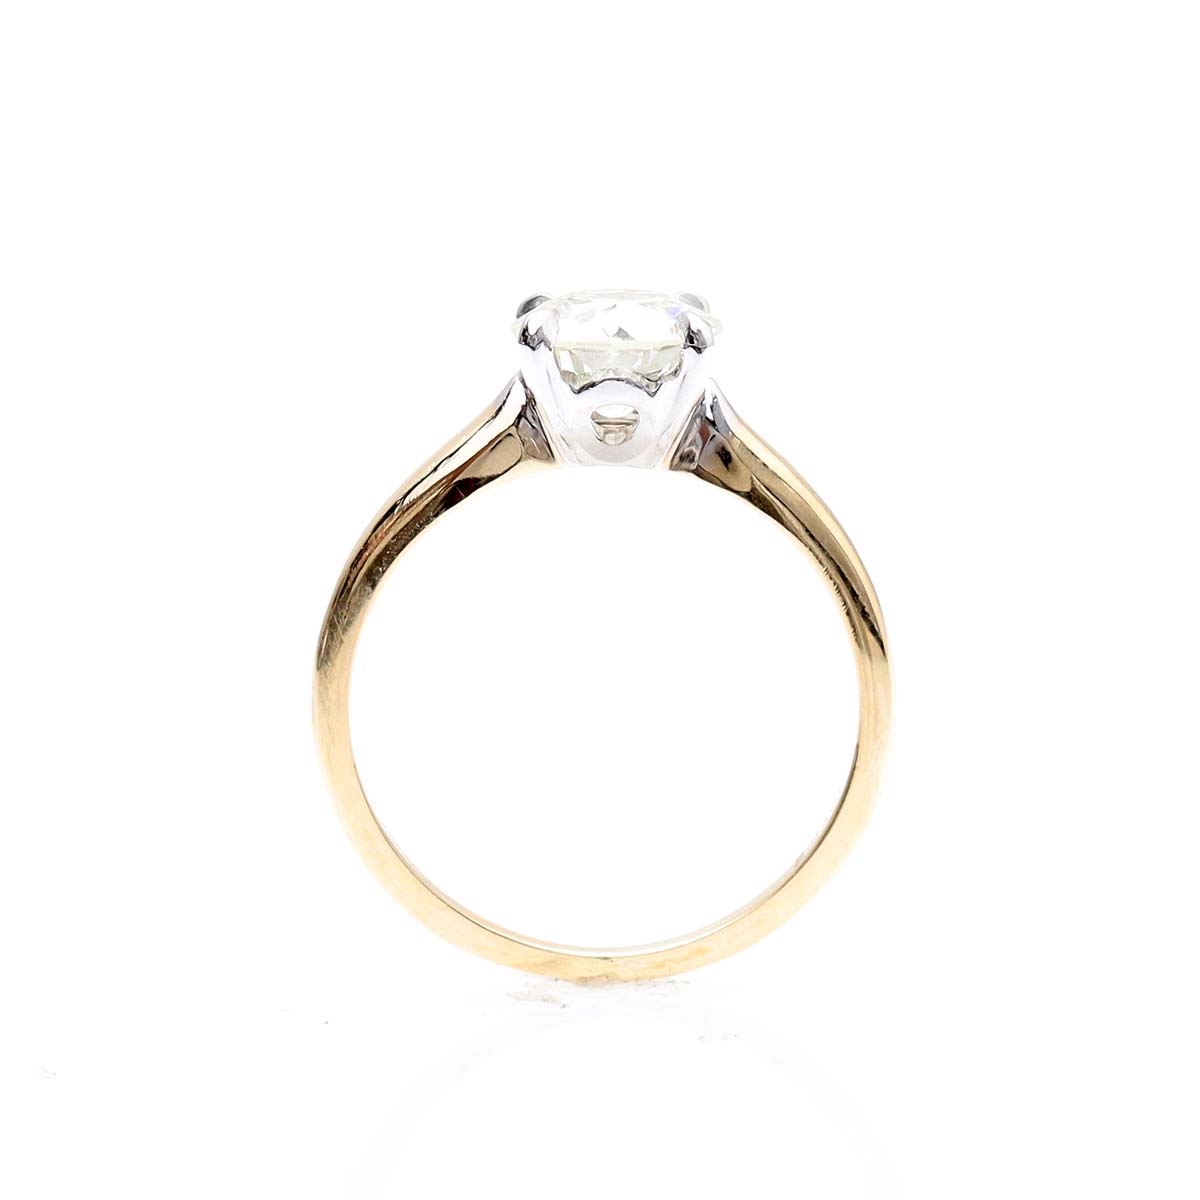 Circa 1940s Engagement Ring #VR240112